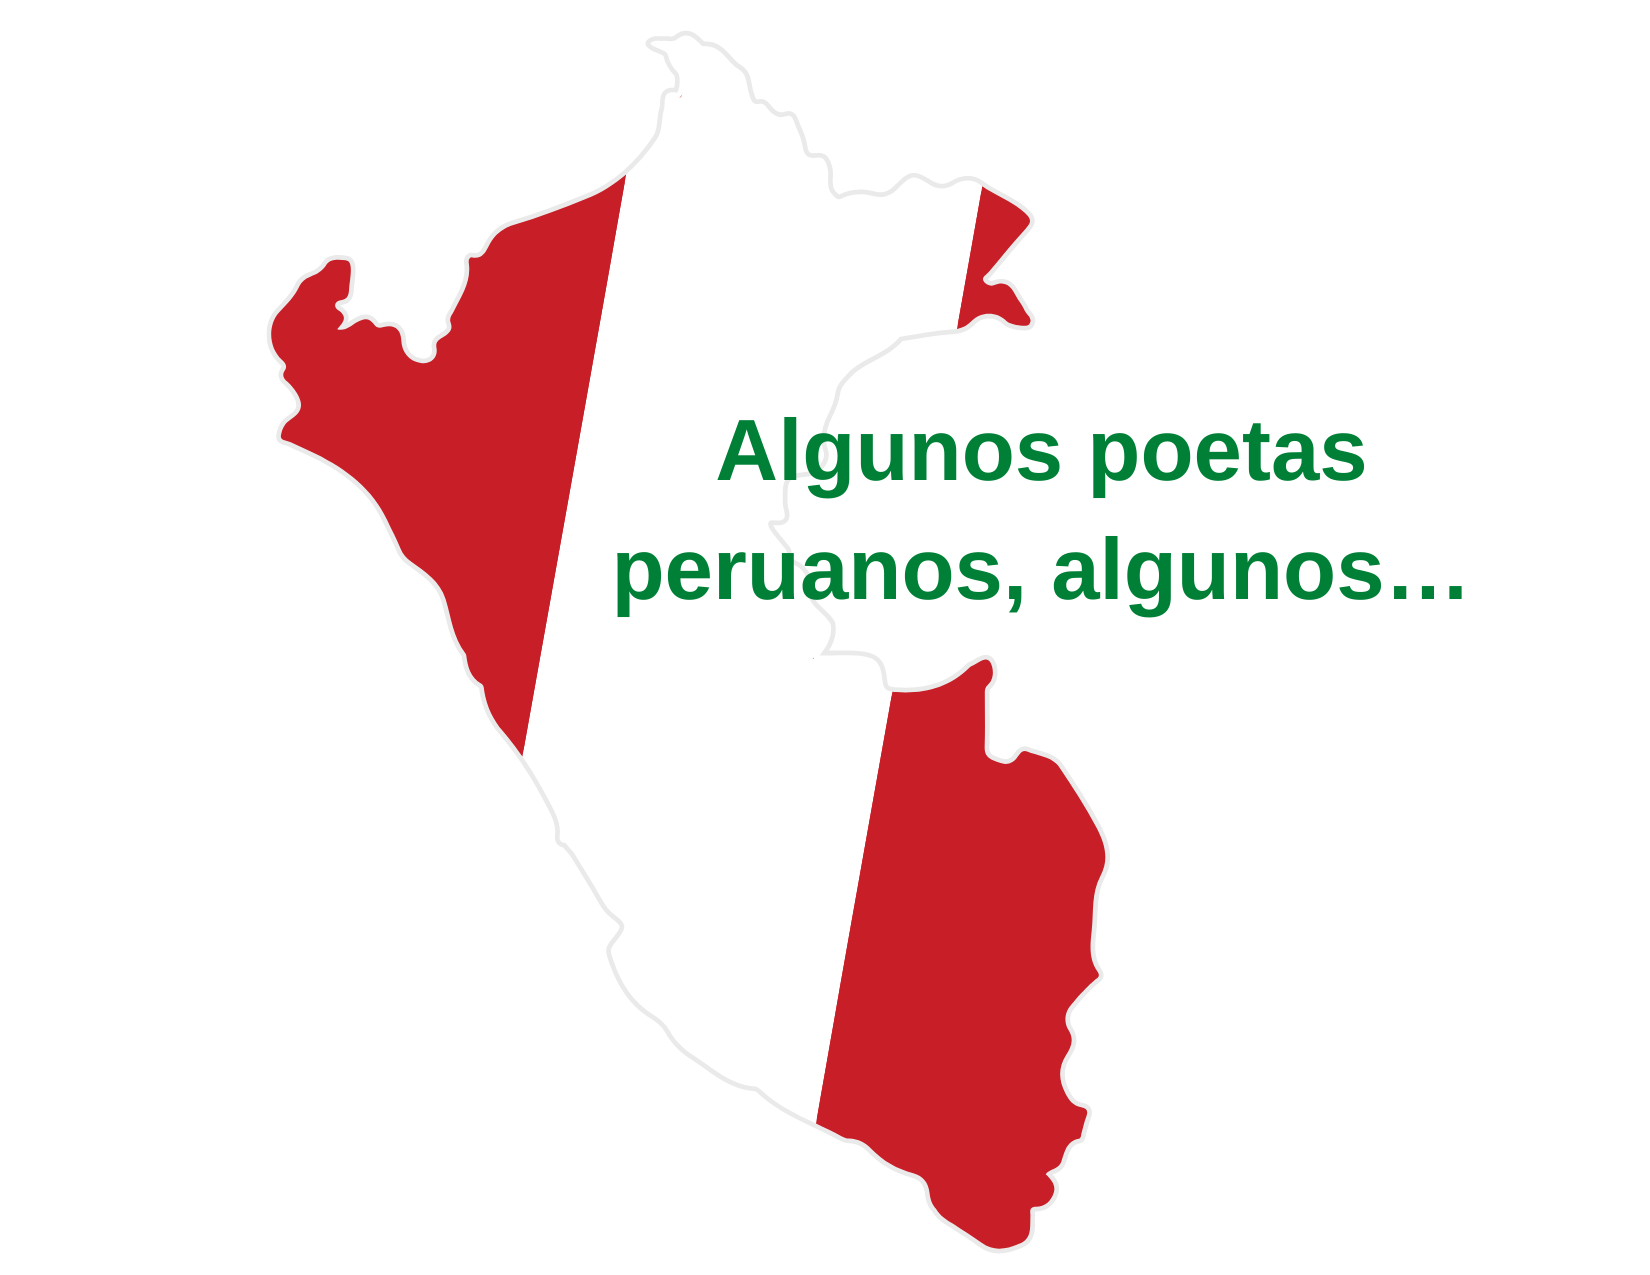 Algunos poetas peruanos, algunos…